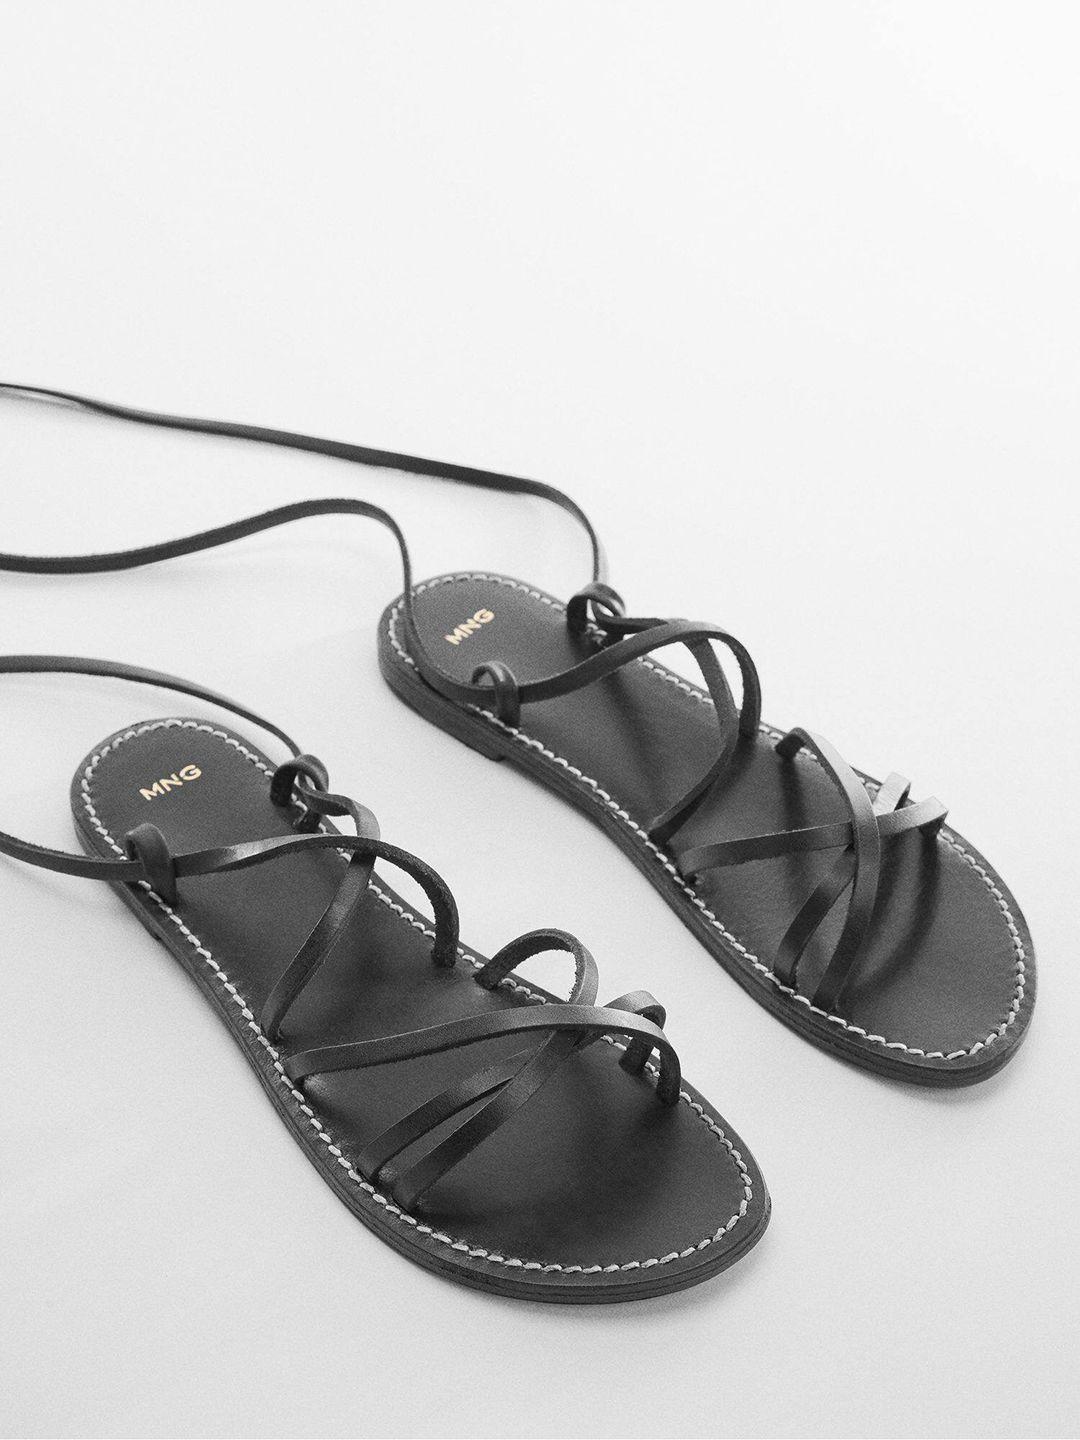 mango women mid-top sustainable leather open toe flats